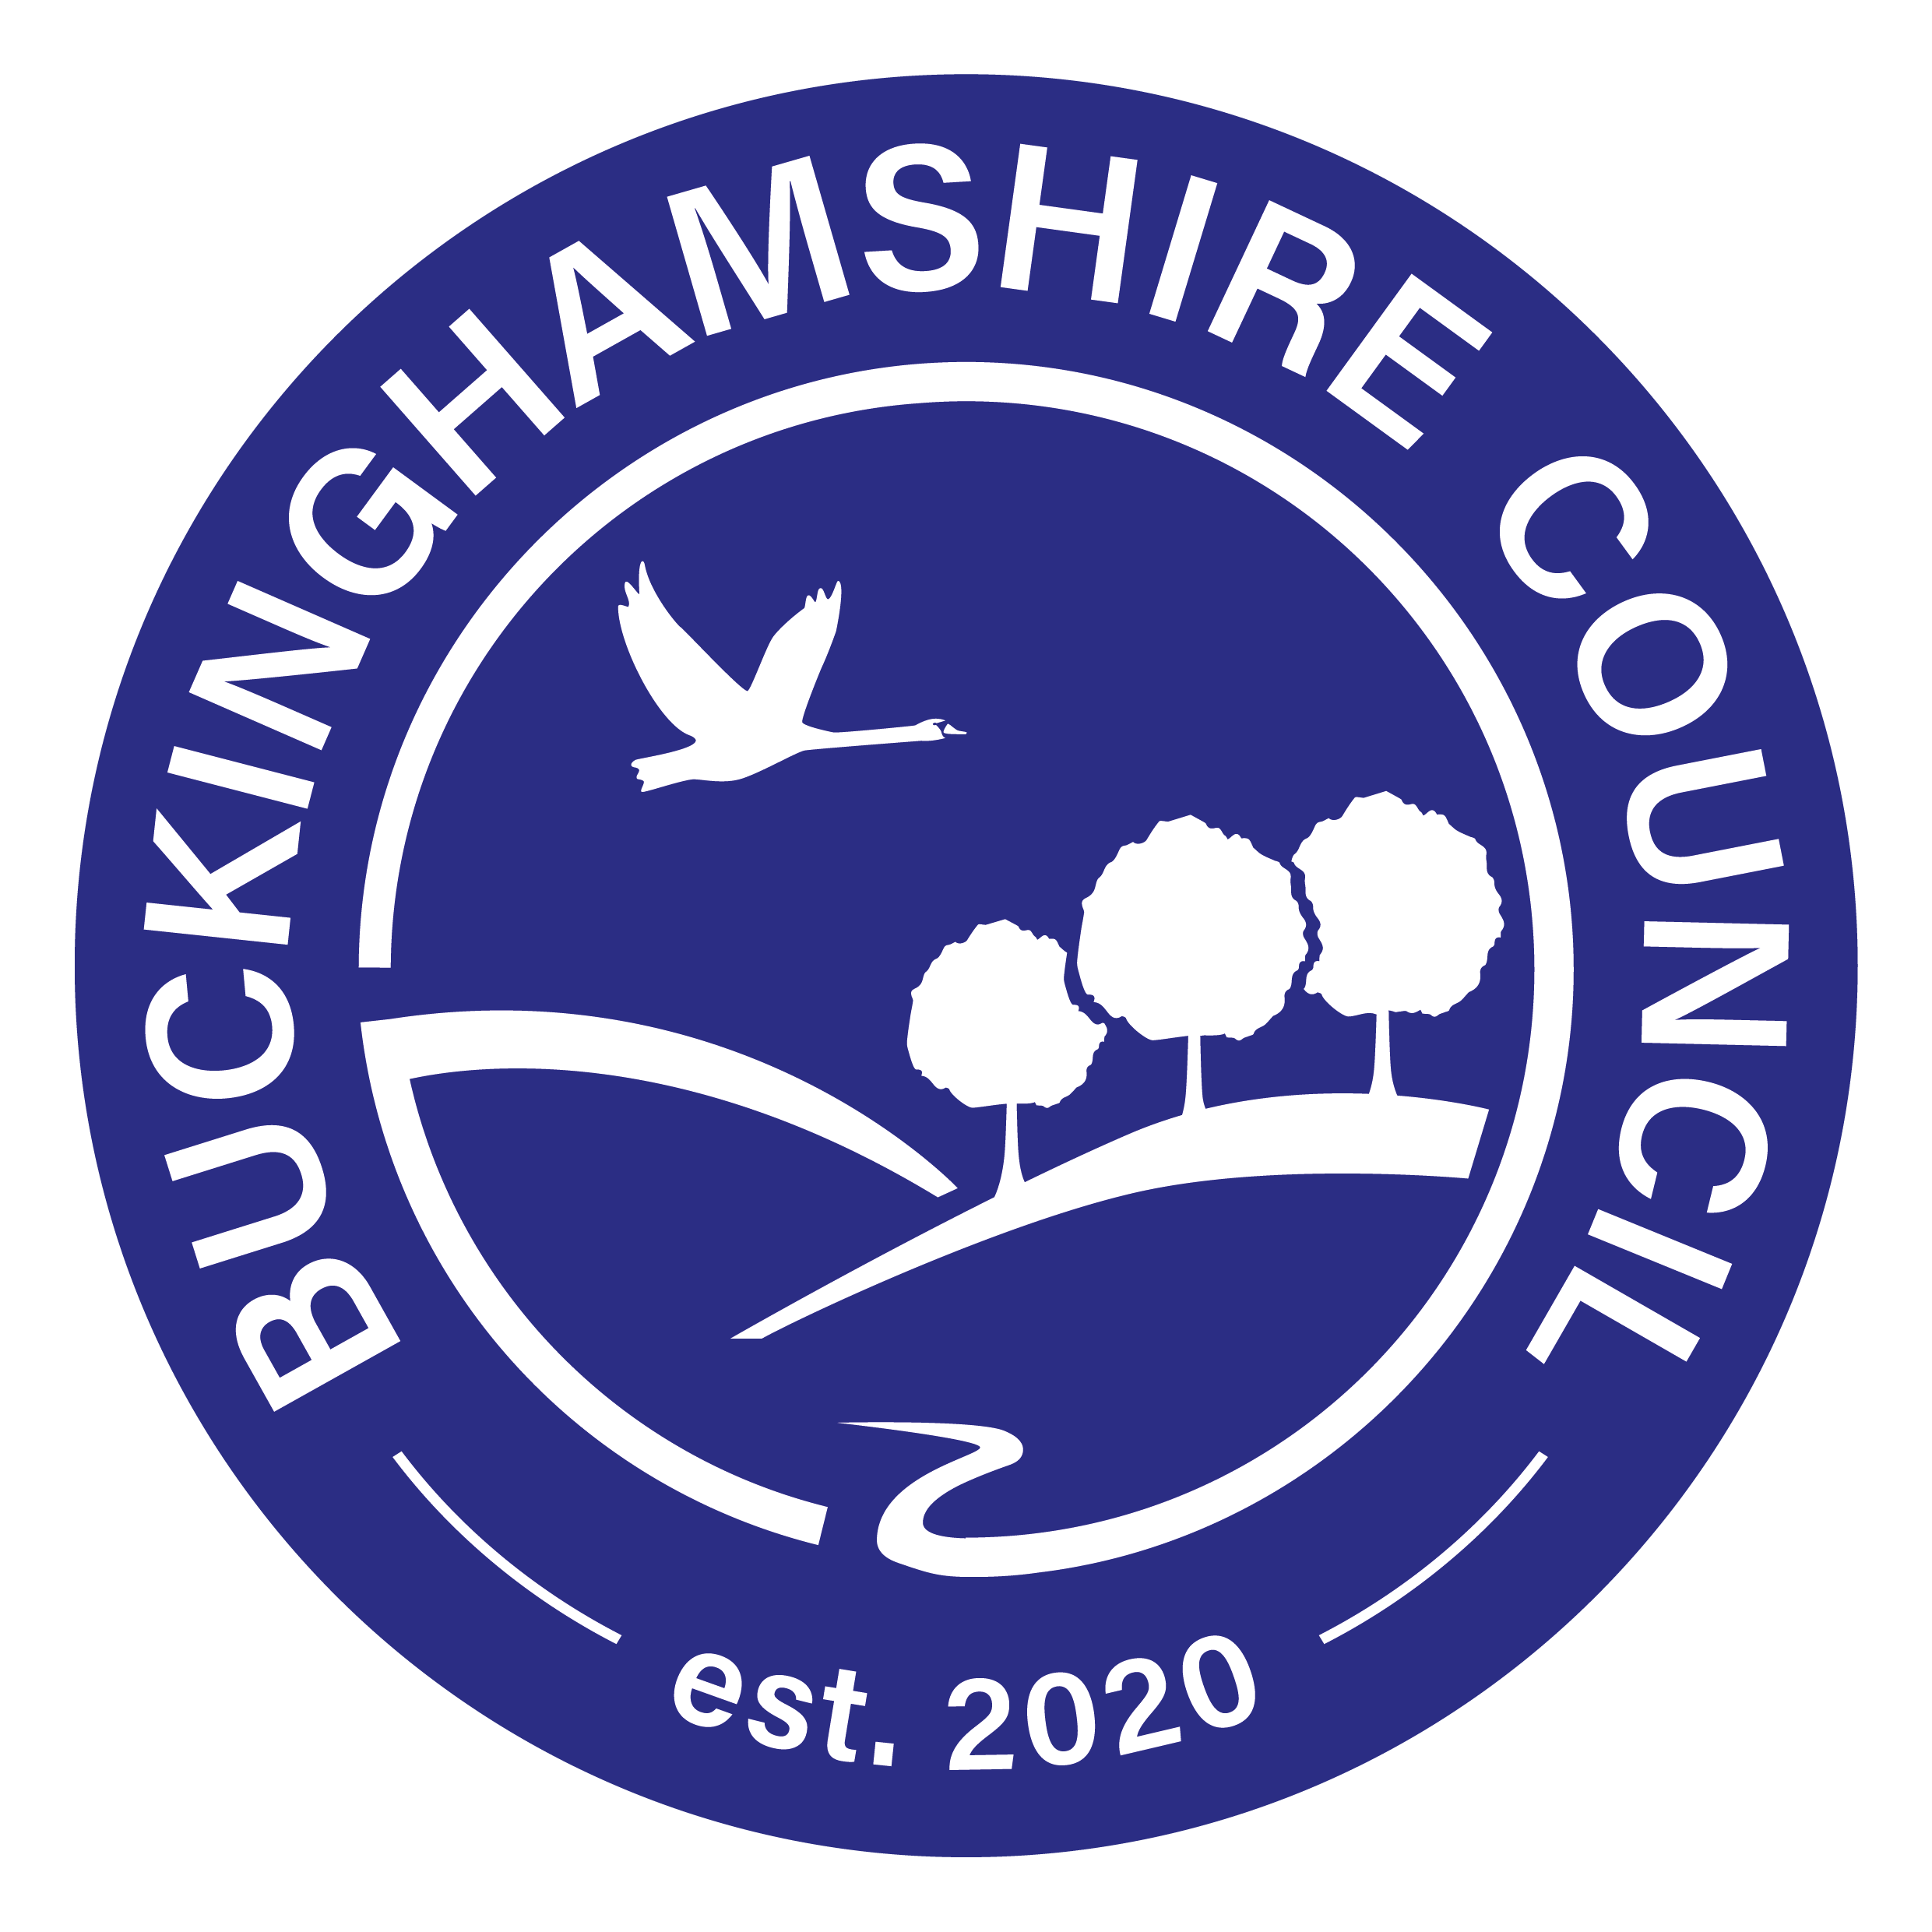 BuckinghamCouncil logo